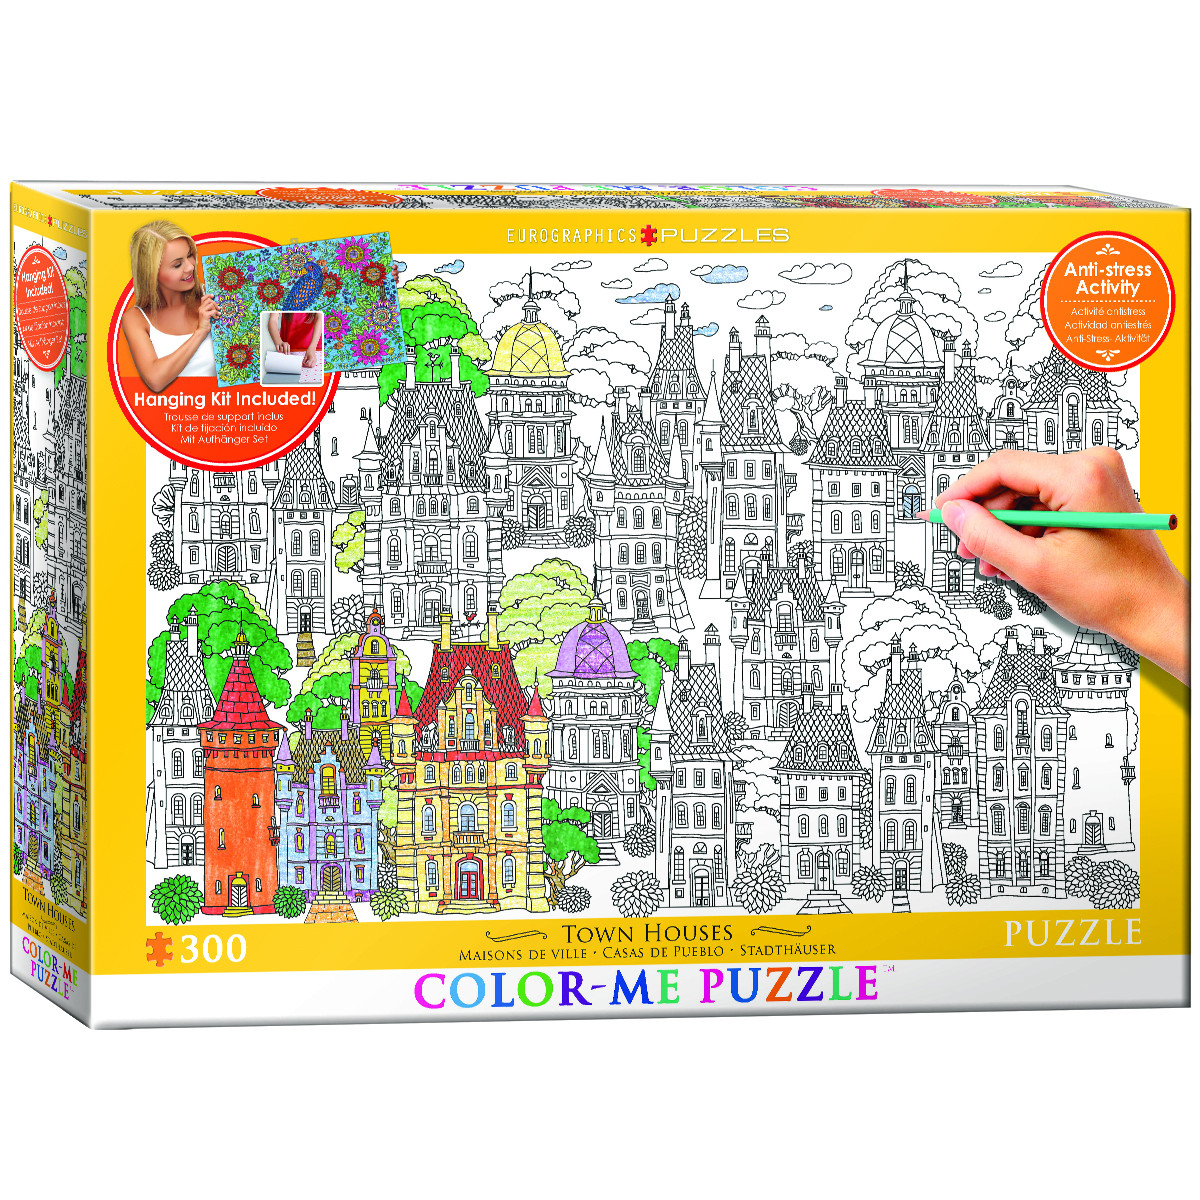 Town Houses (Color-Me Puzzle) Graphics / Illustration Jigsaw Puzzle